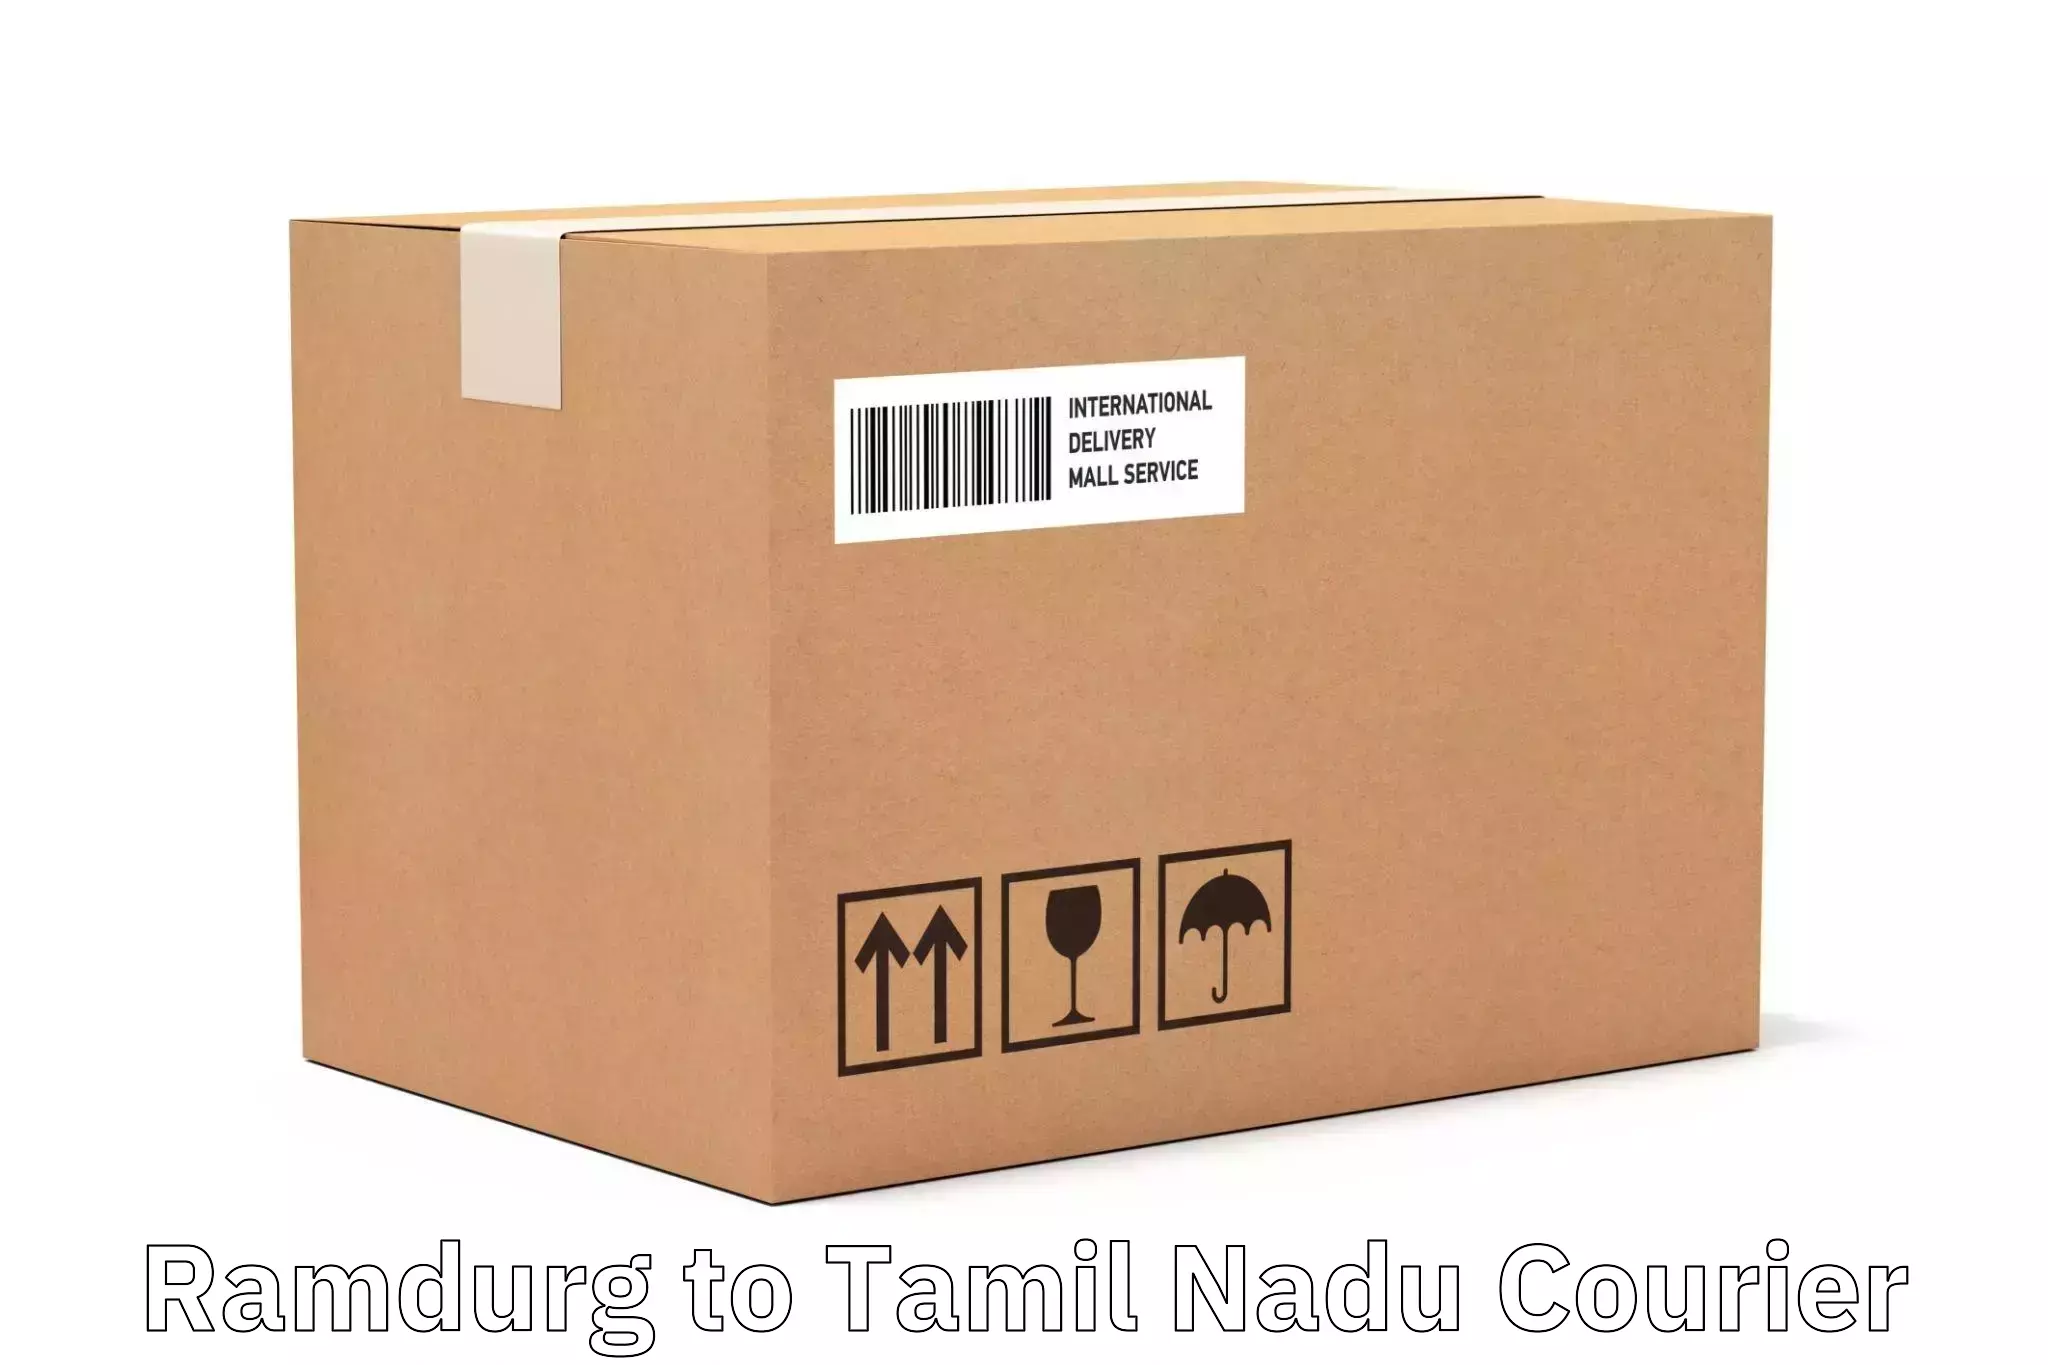 24-hour delivery options Ramdurg to Kanyakumari